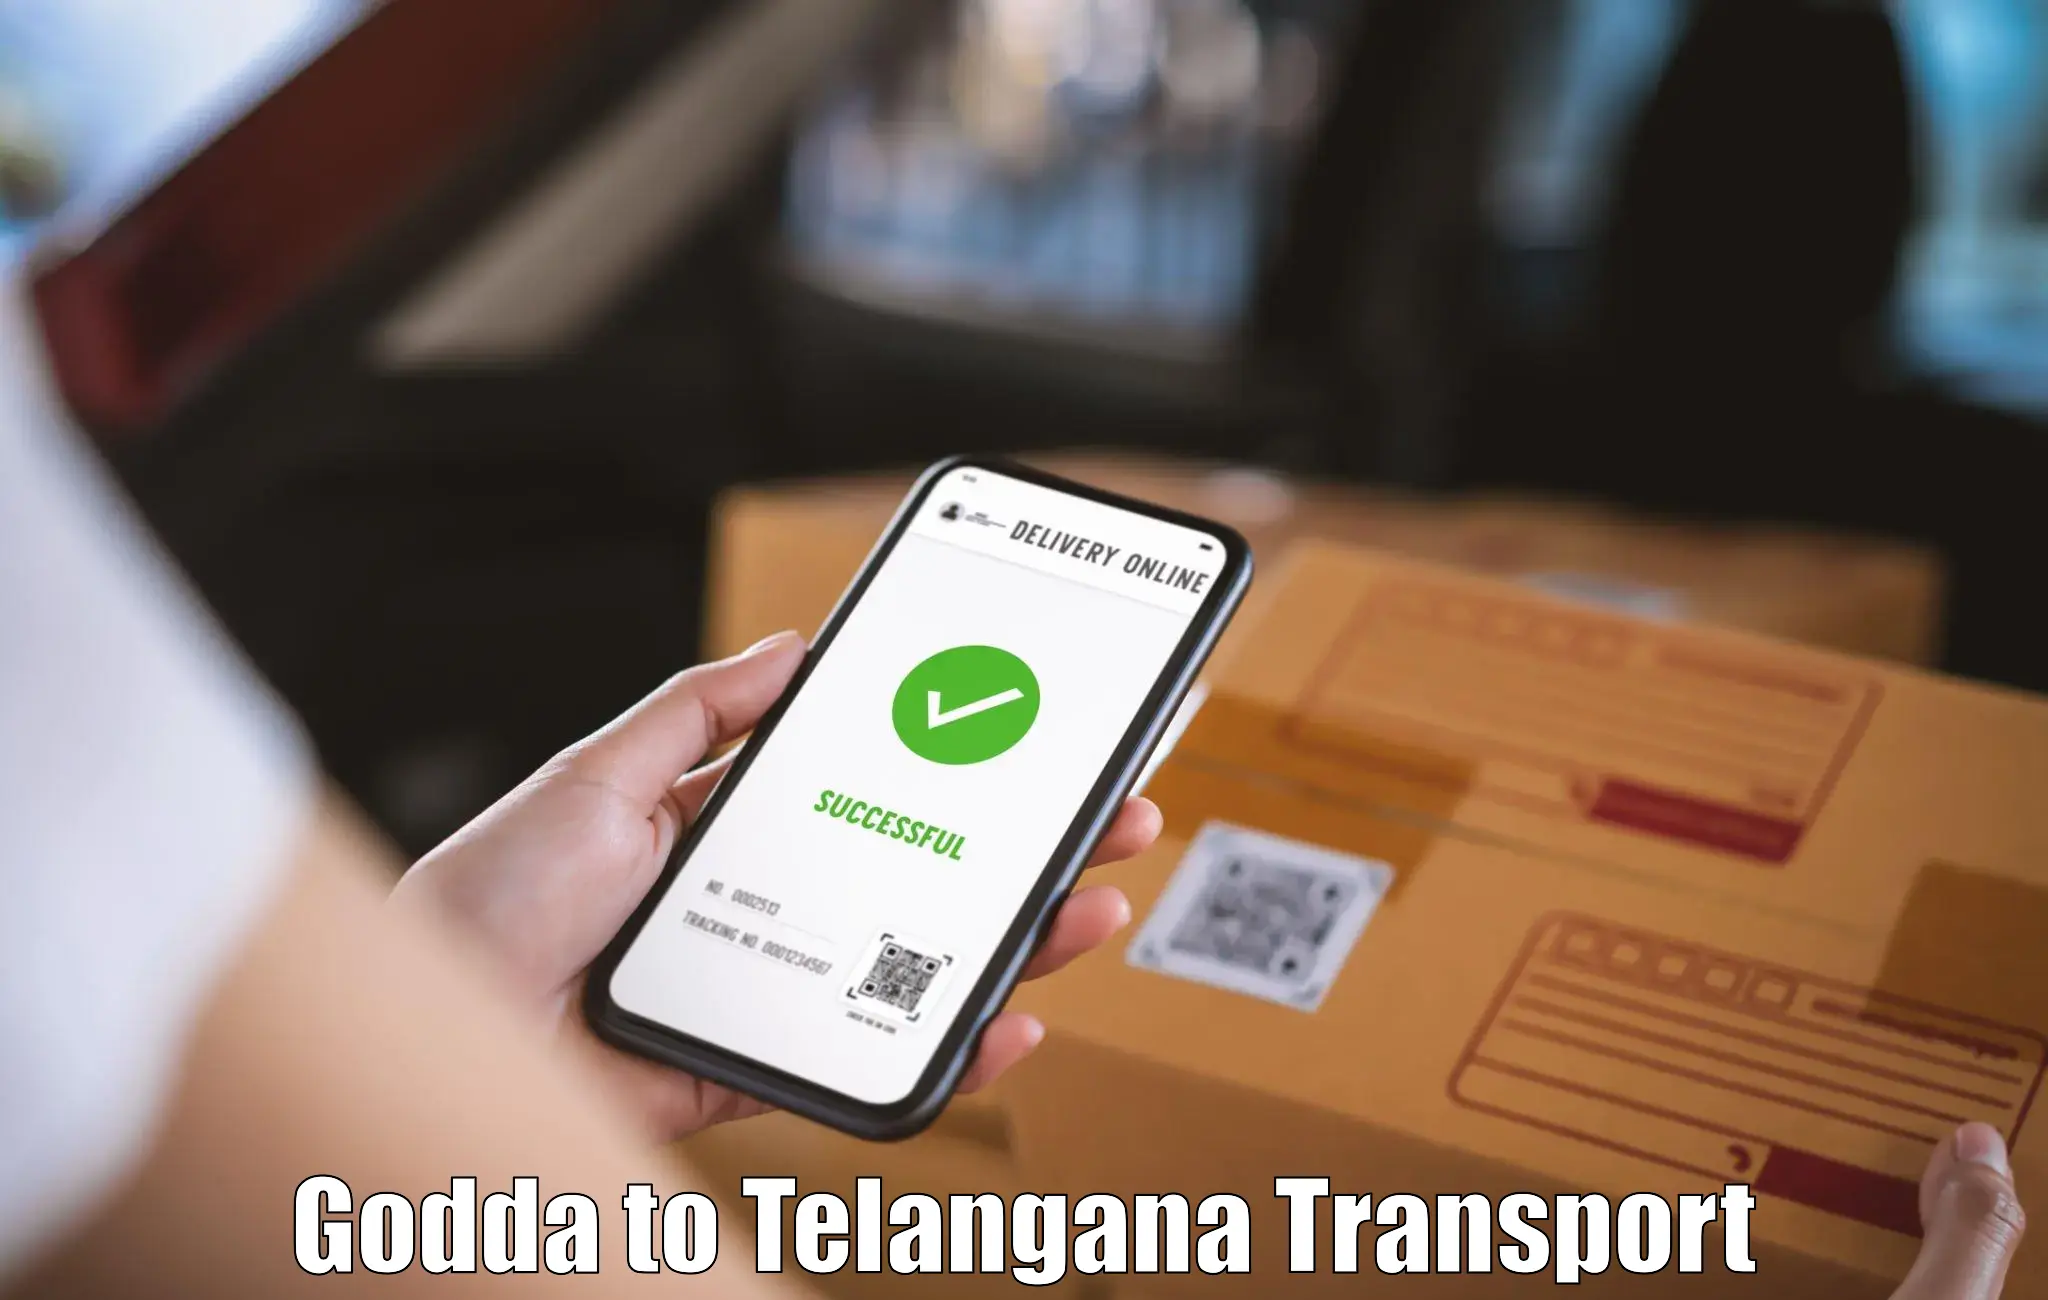 Transport in sharing Godda to Mancherial